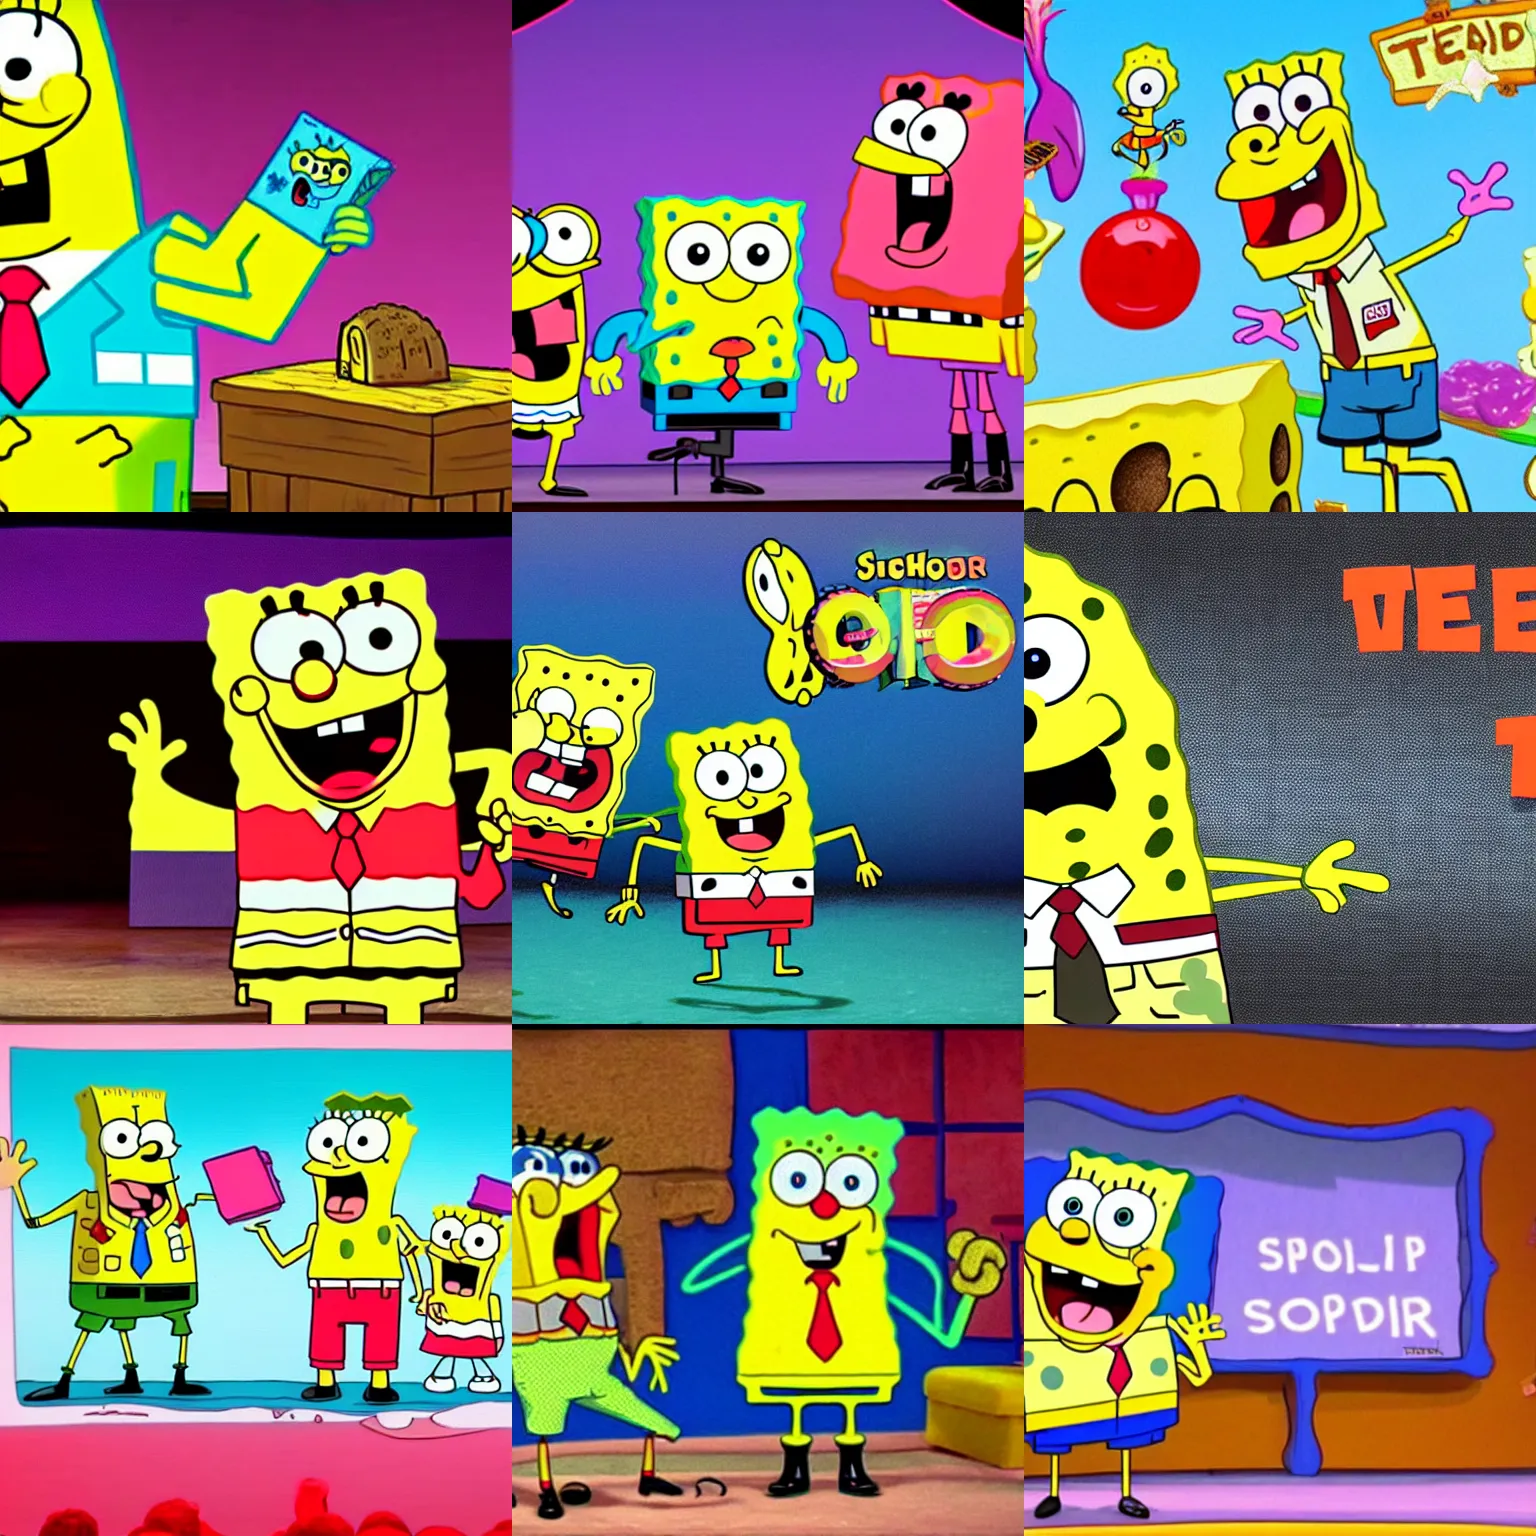 Prompt: spongebob squarepants ted talk